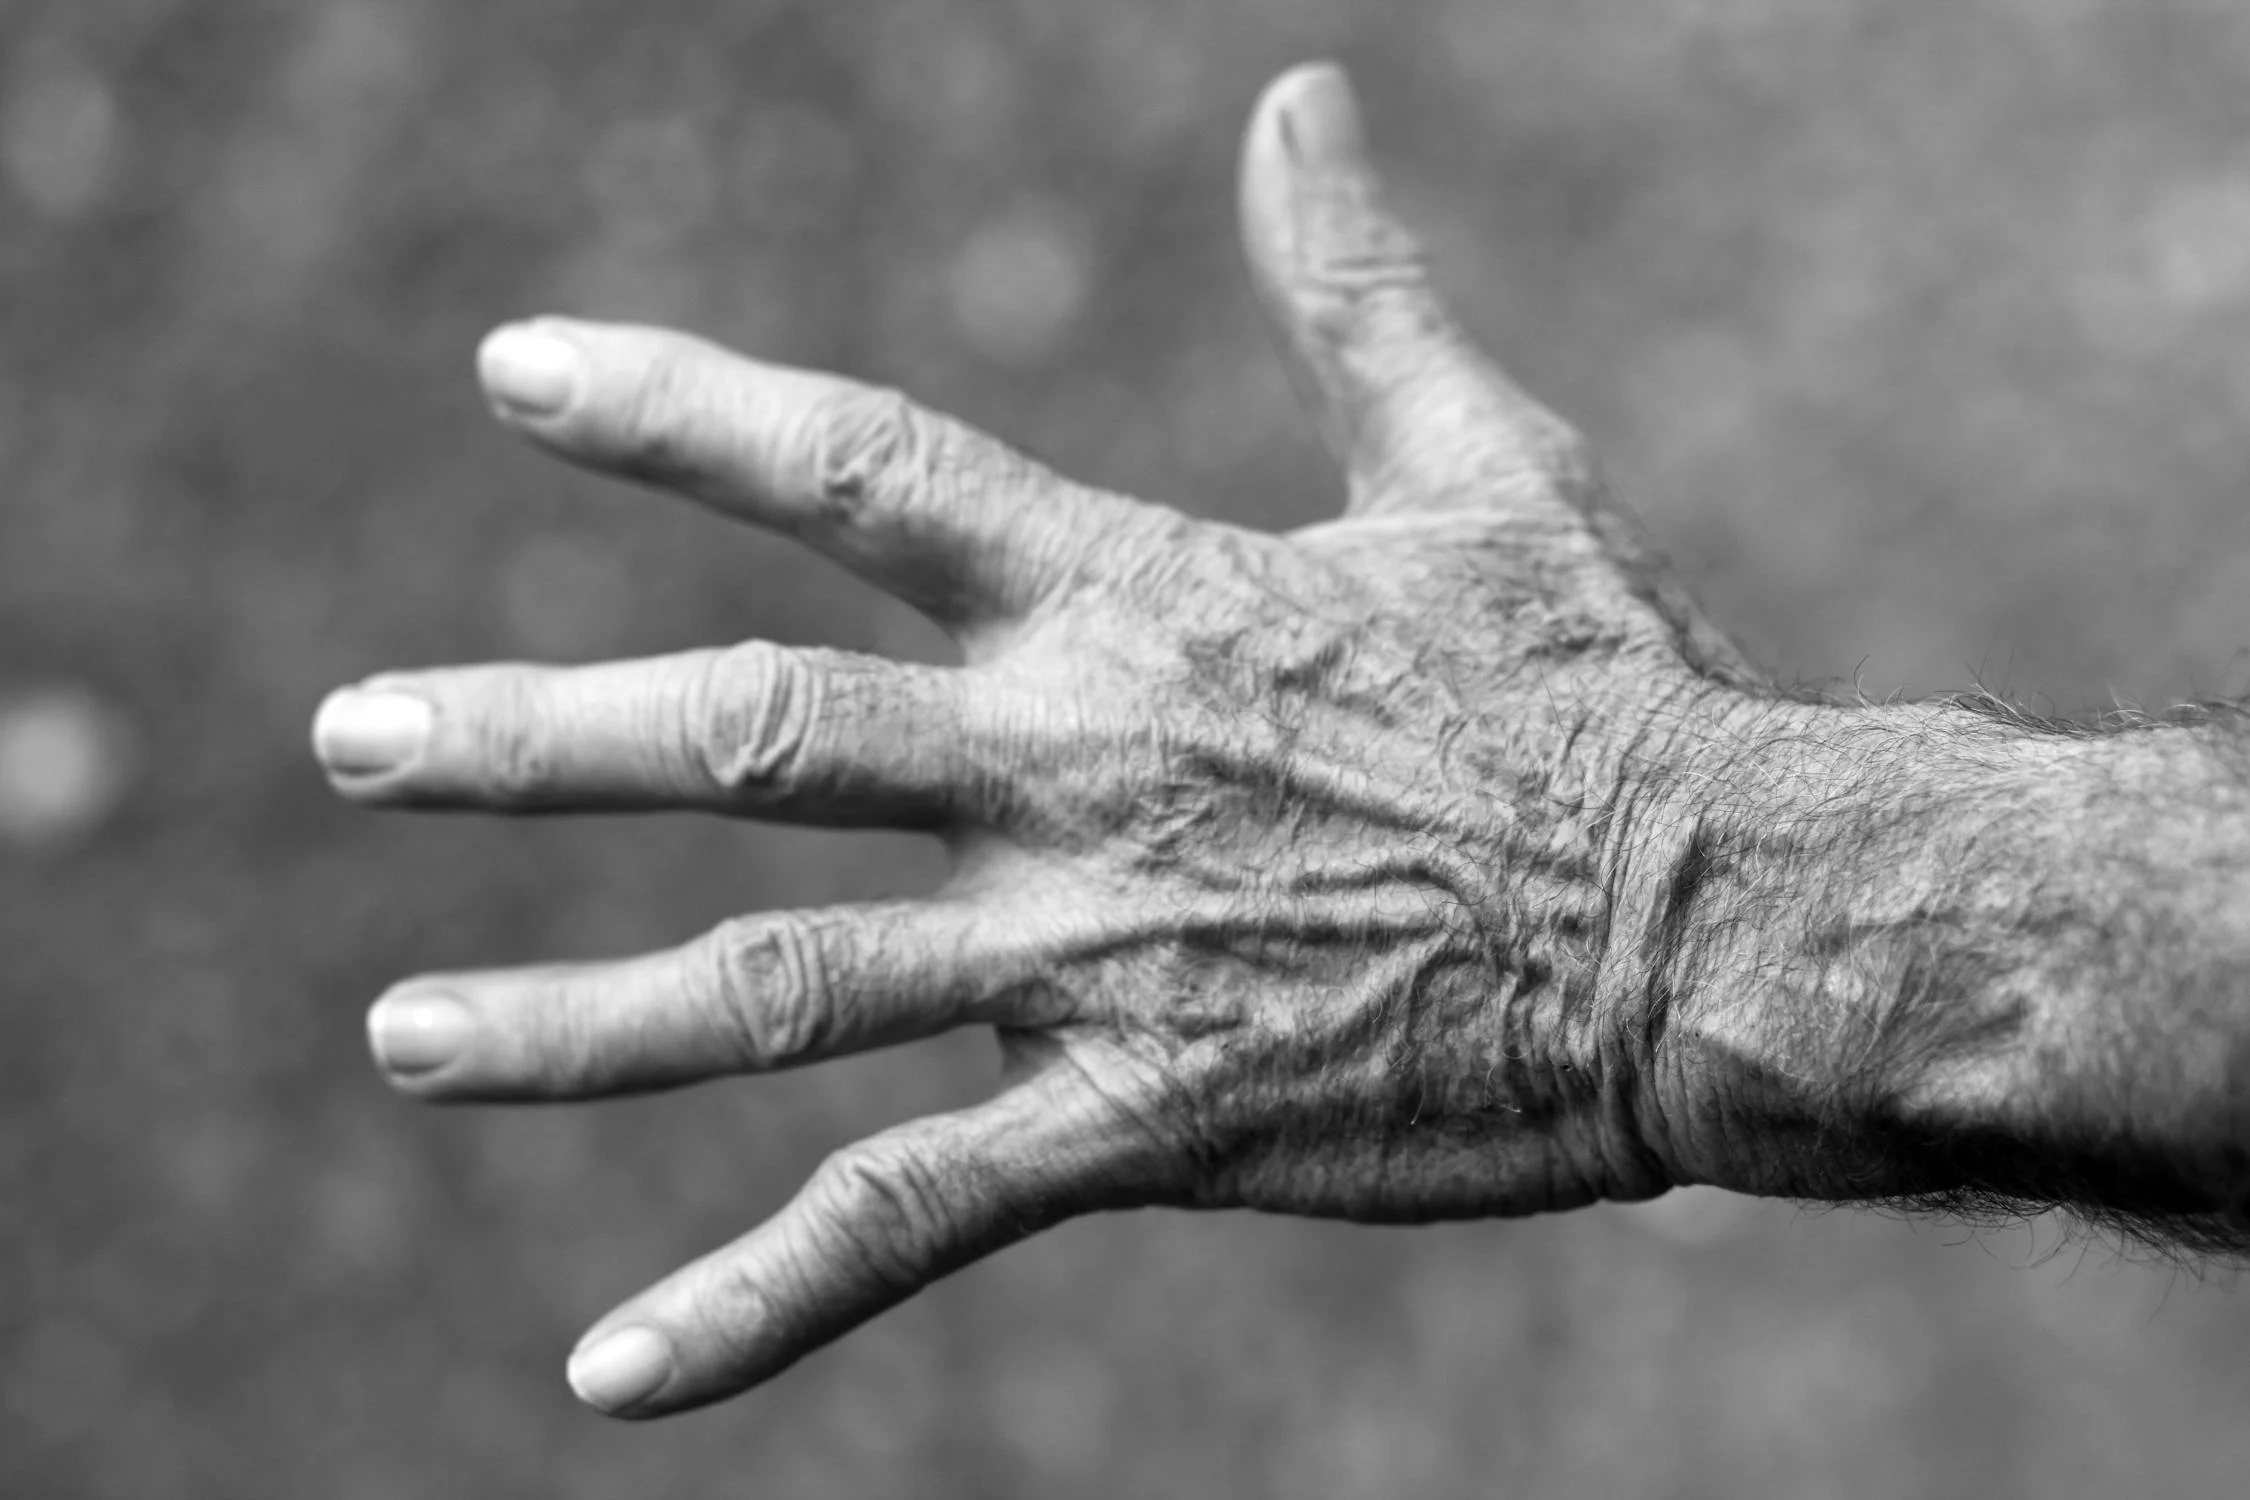 An elderly patient’s hand